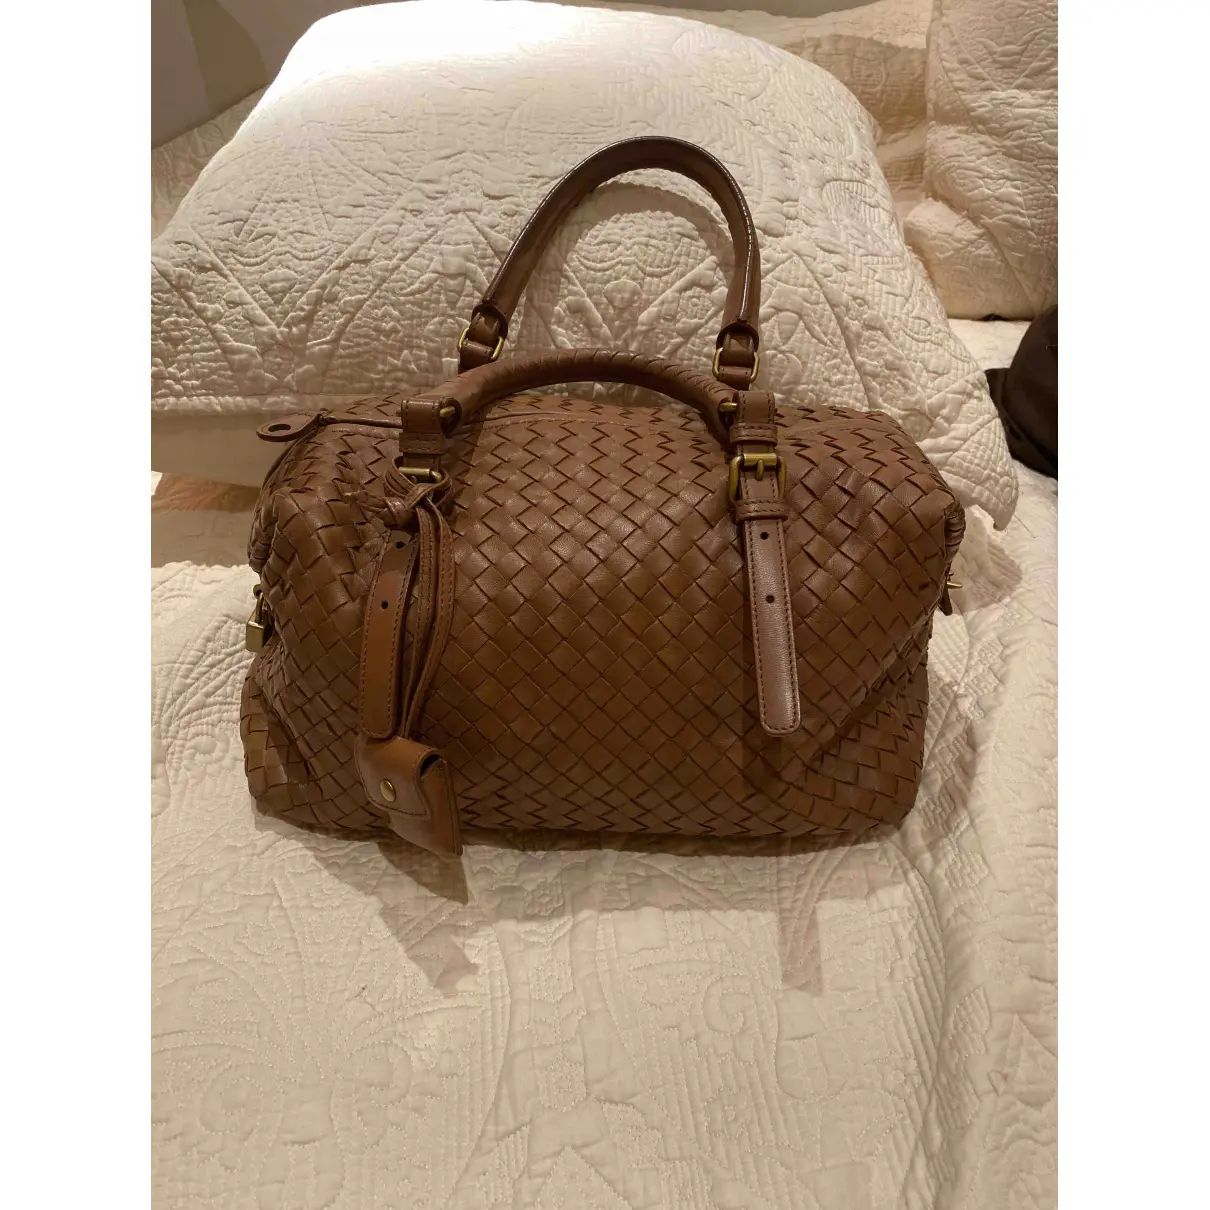 Buy Bottega Veneta Montaigne leather handbag online